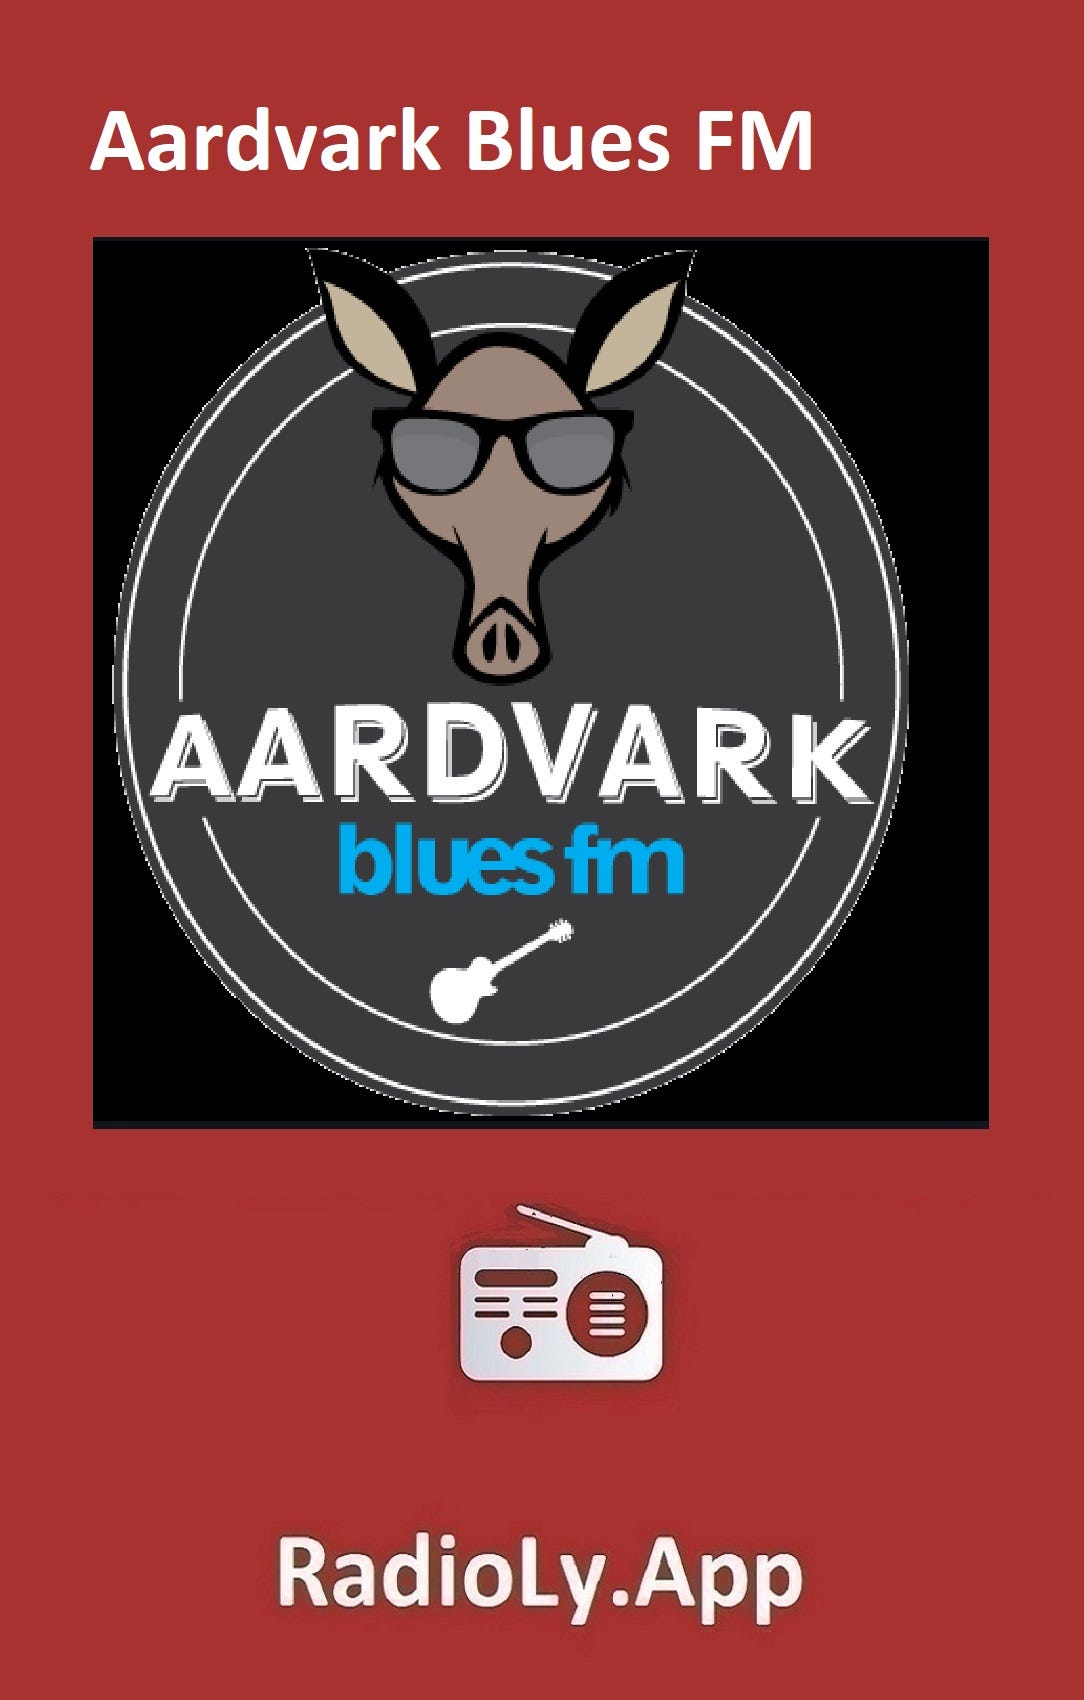 Aardvark Blues FM — USA Radio Station Online — RadiolyApp - Radioly - Medium